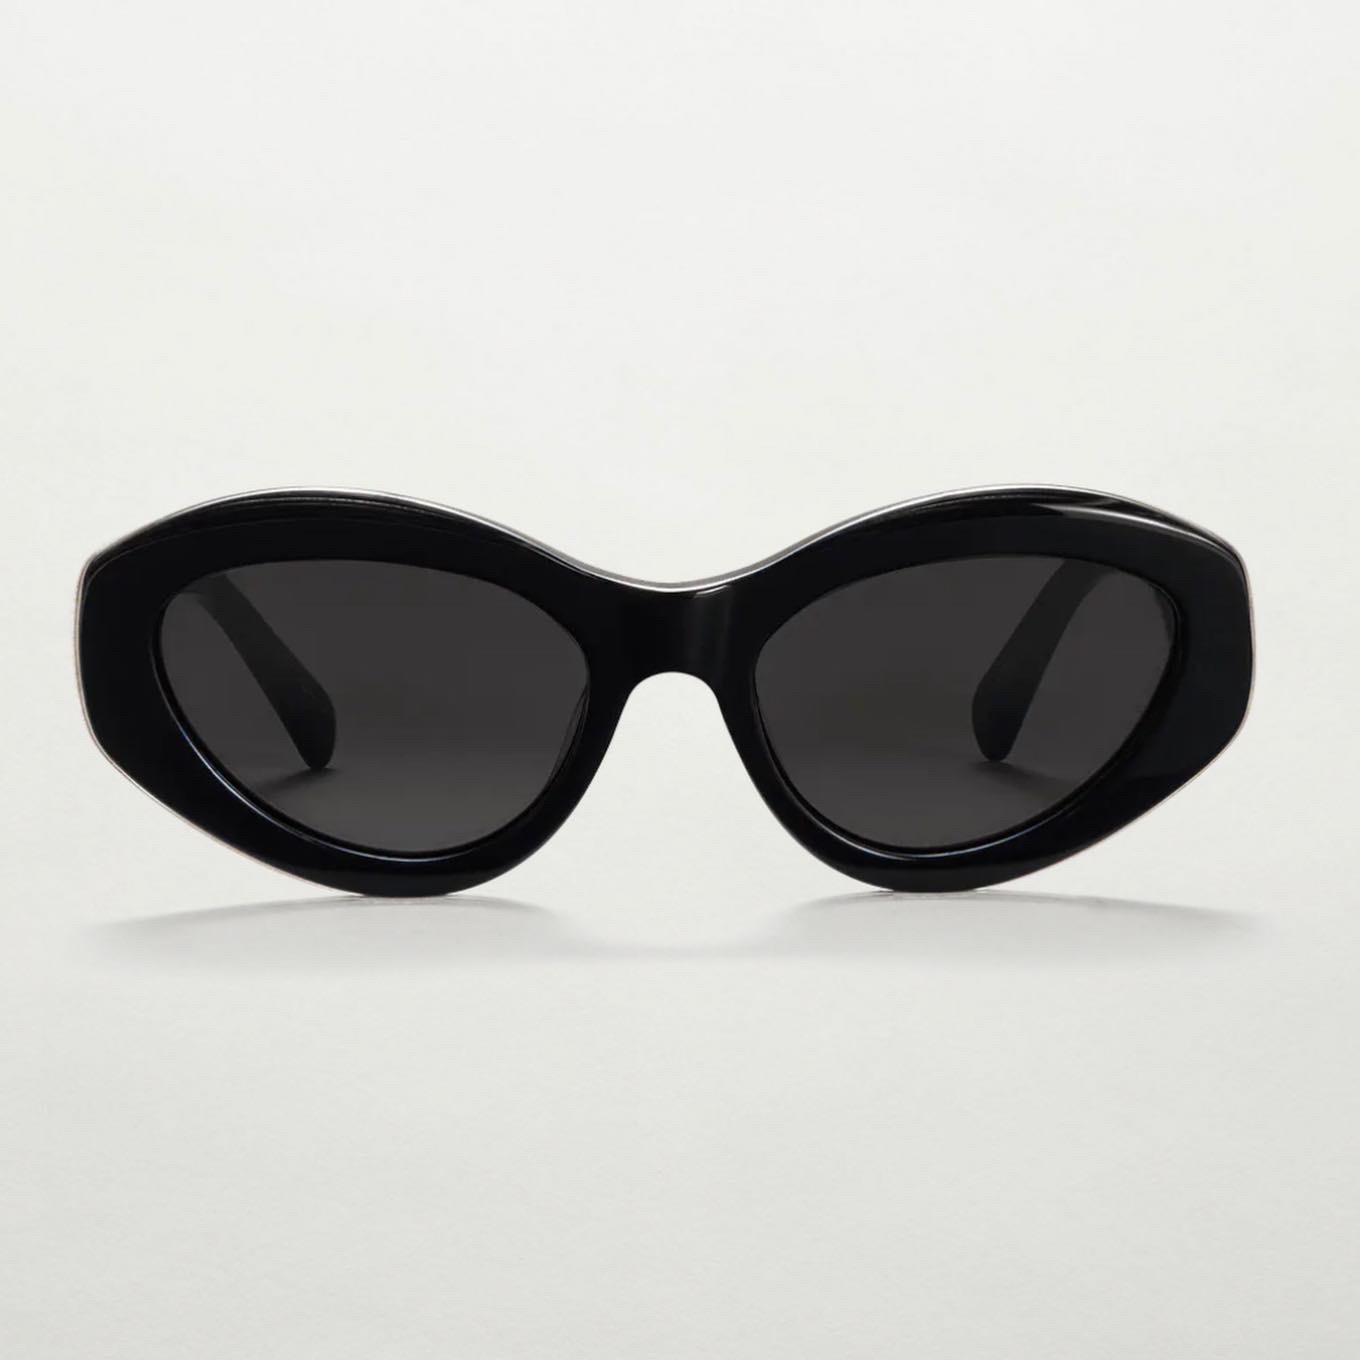 #09 Chimi eyewear black